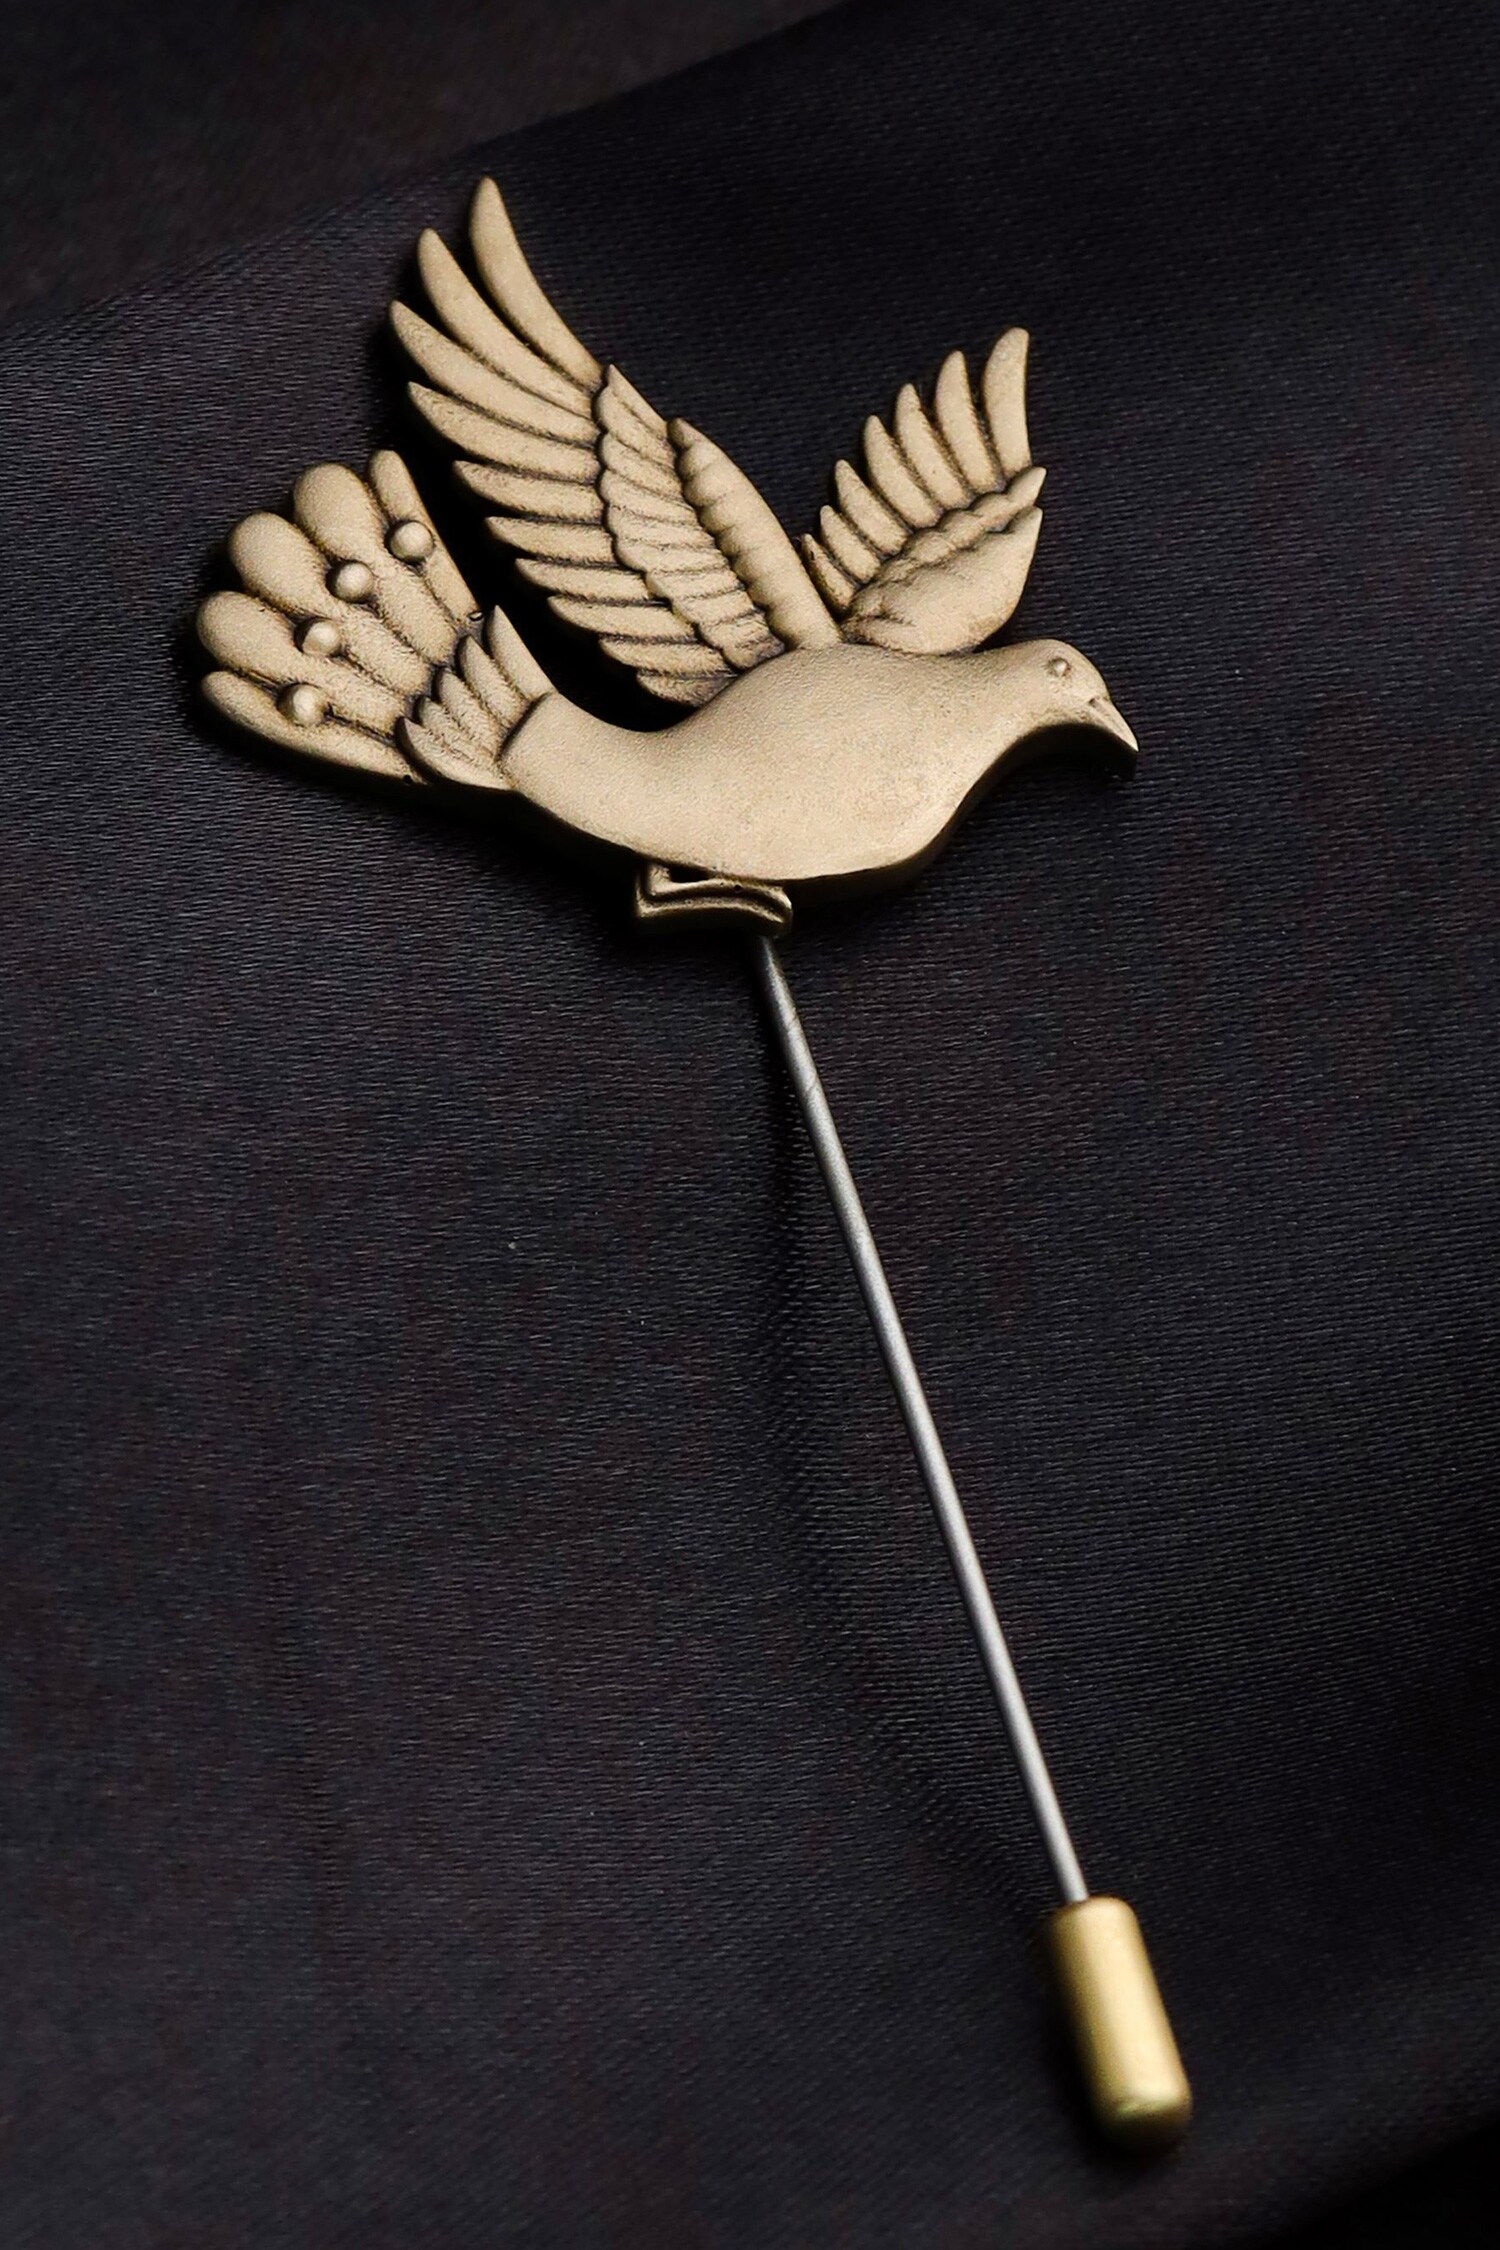 Cosa Nostraa Gold Flying Bird Lapel Pin